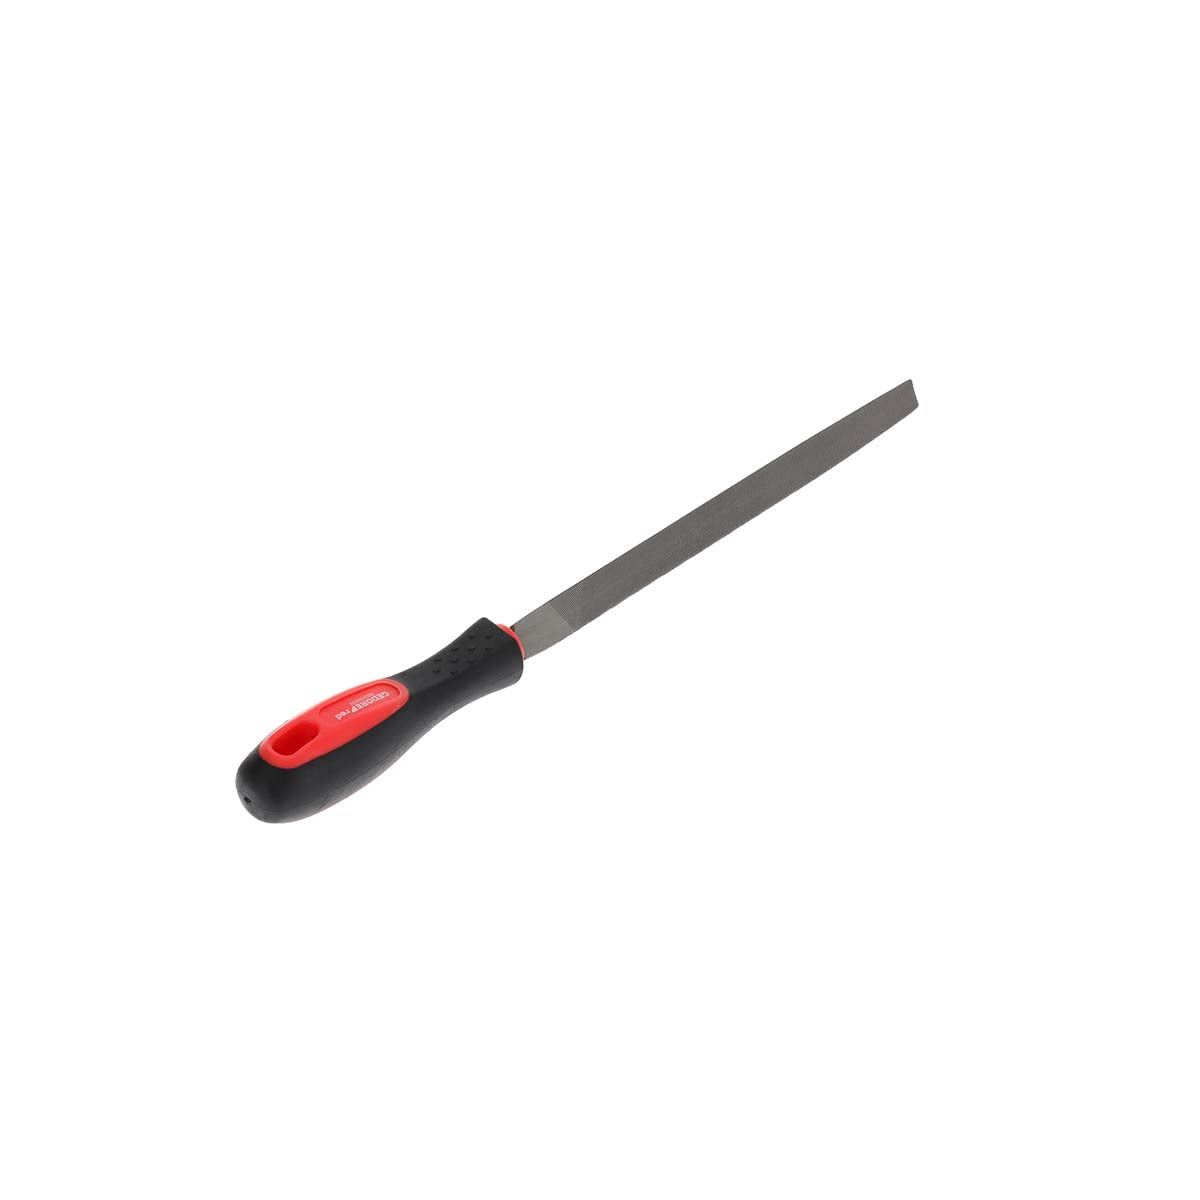 GEDORE red R93100052 - Triangular file, interfine 2, L=310 mm, 2-component handle (3301591)